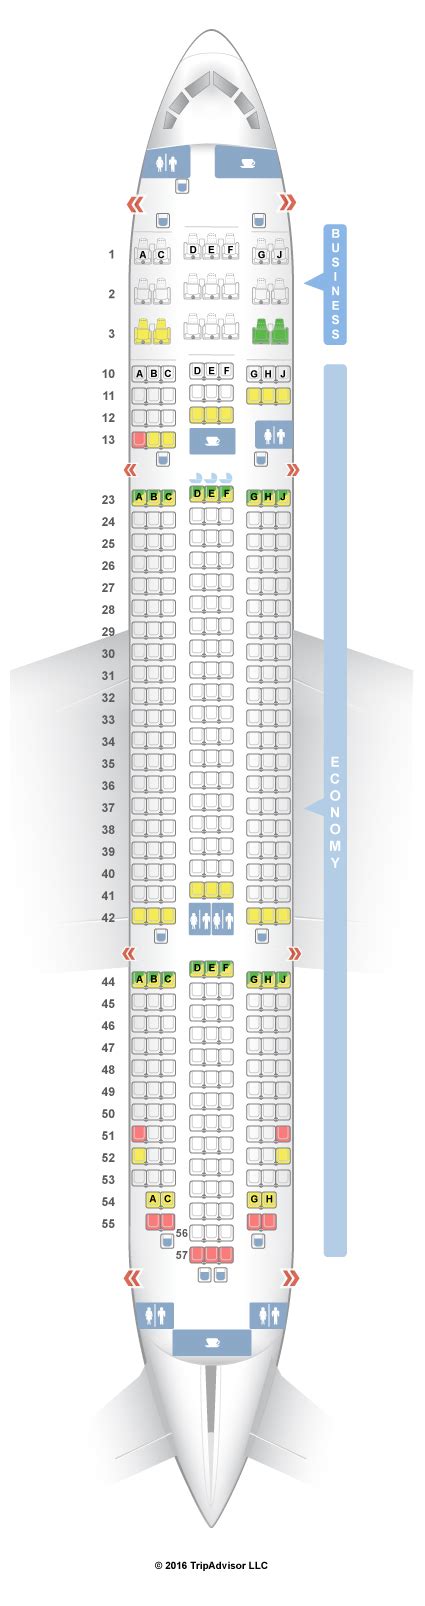 Seatguru Seat Map Jetstar Boeing 787 8 788